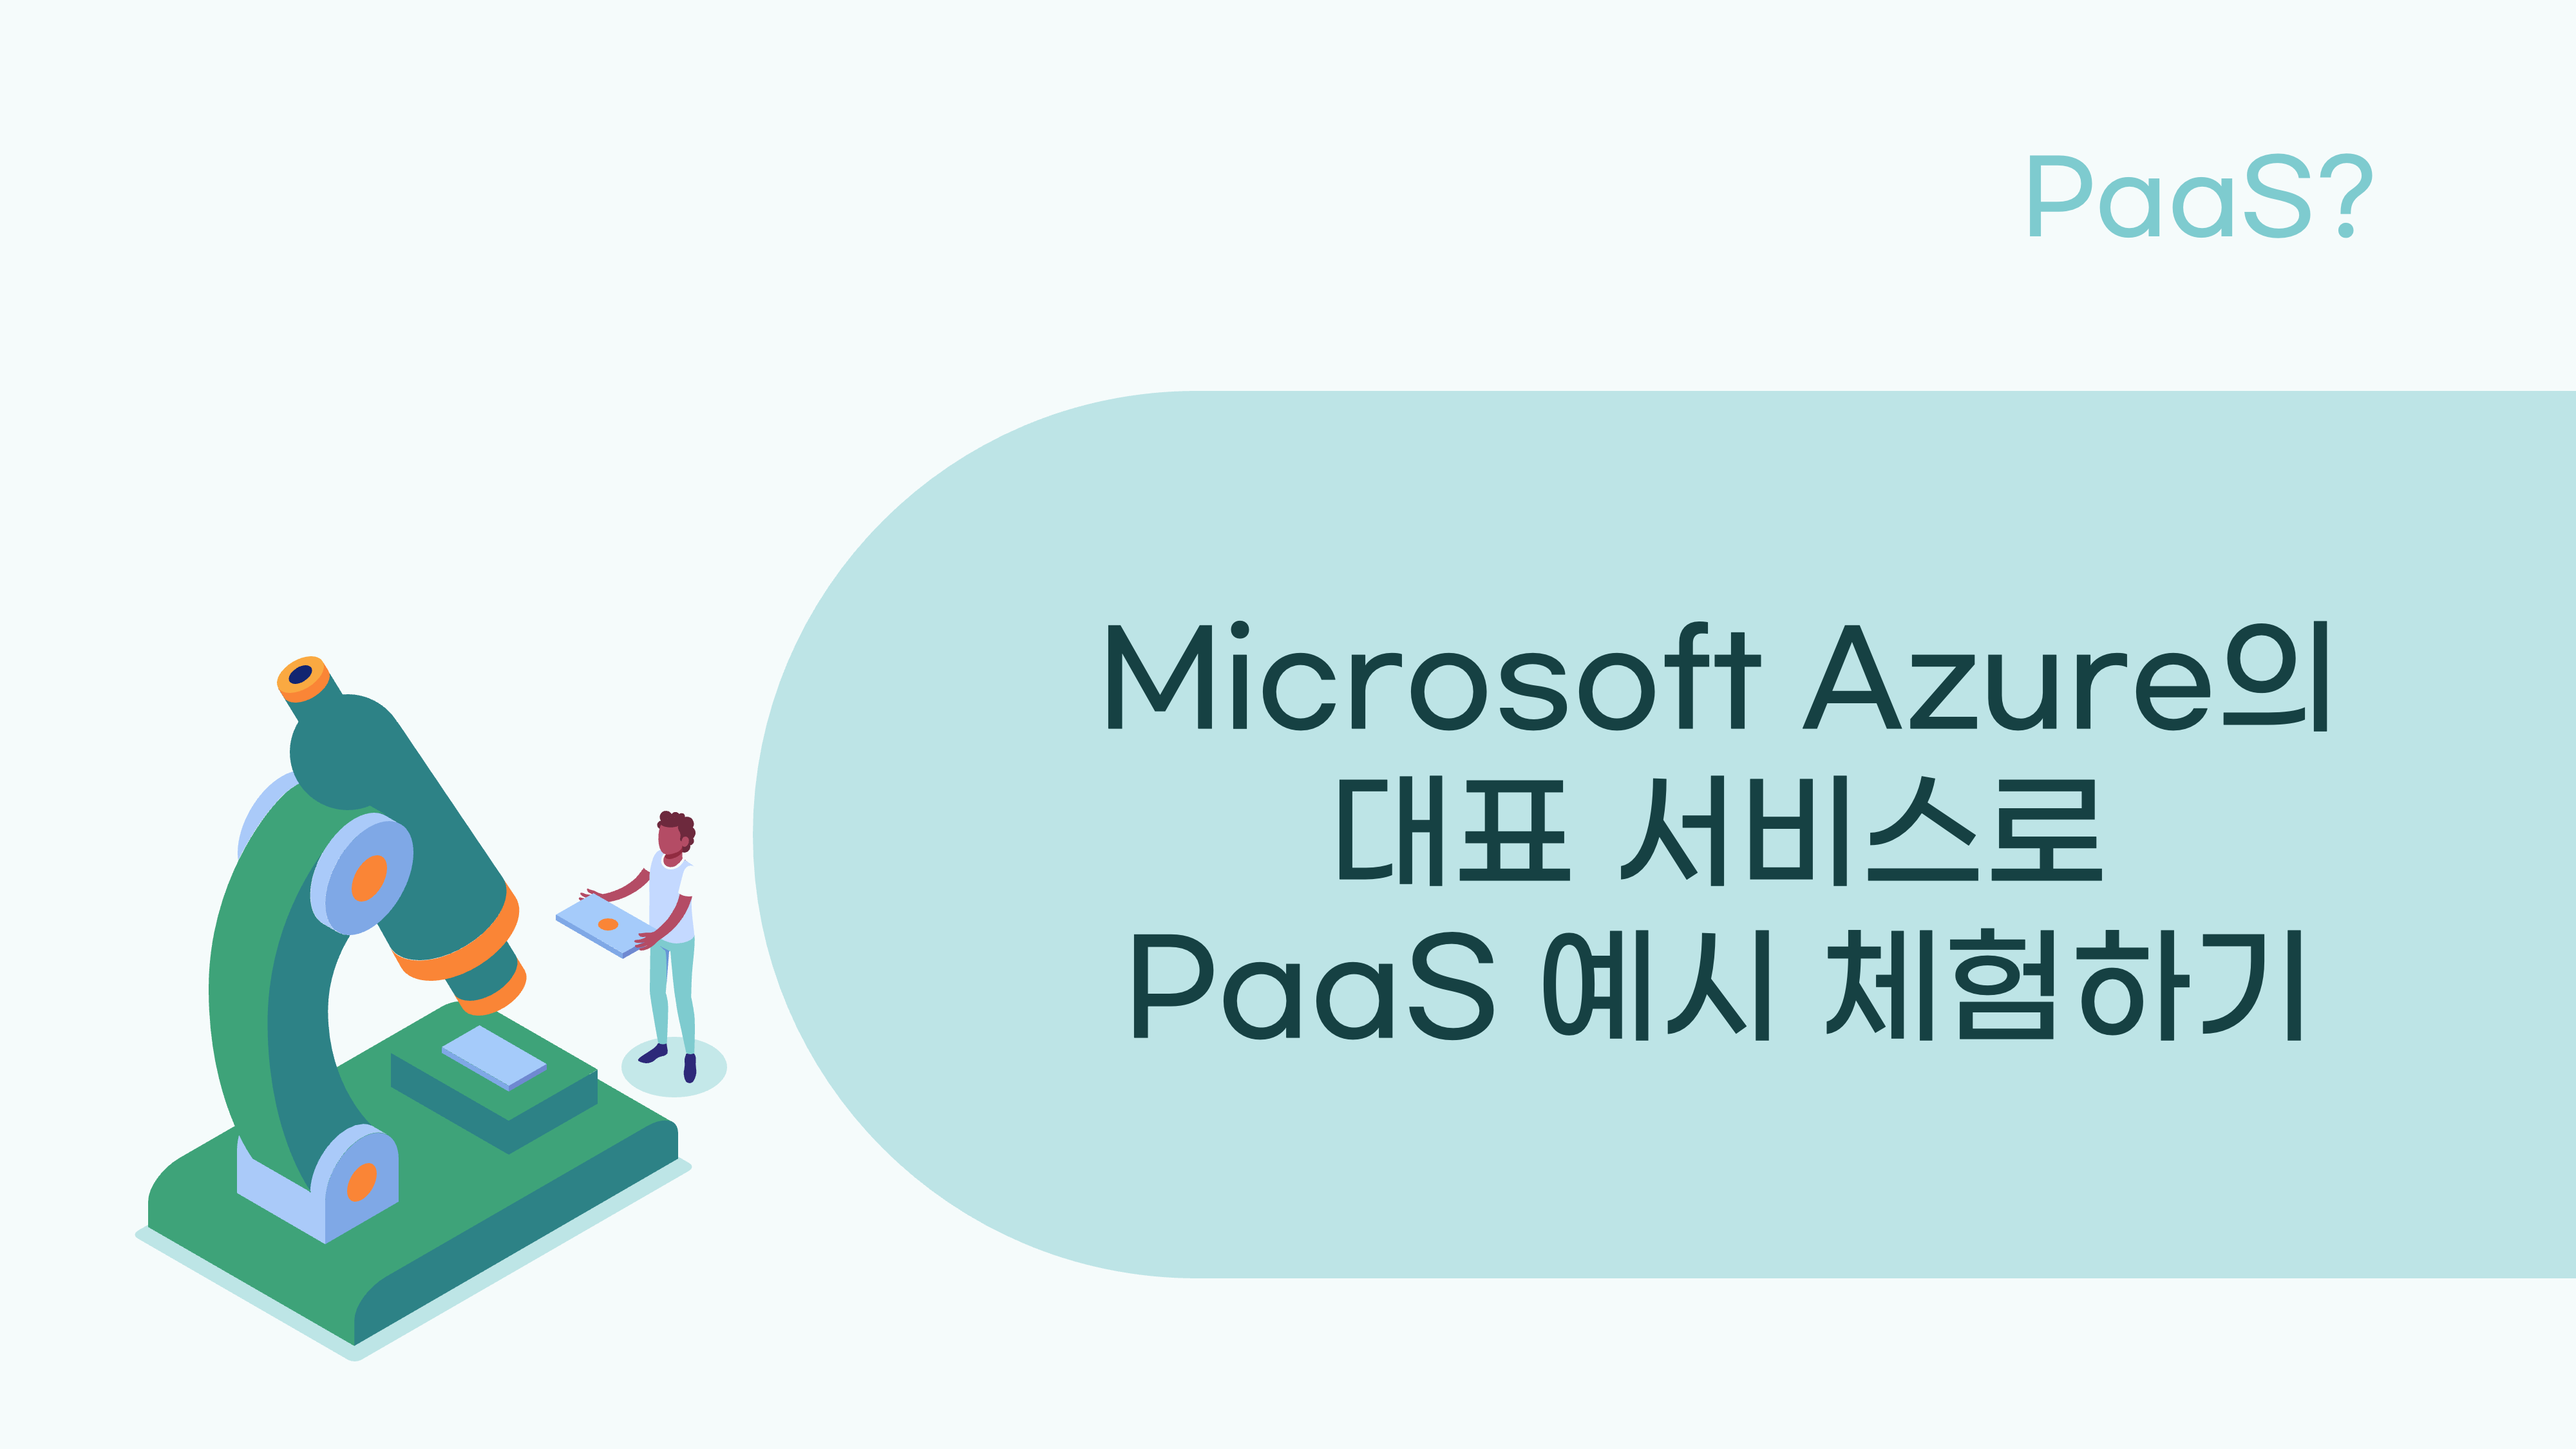 PaaS란? Microsoft Azure의 대표 서비스로 PaaS 예시 체험